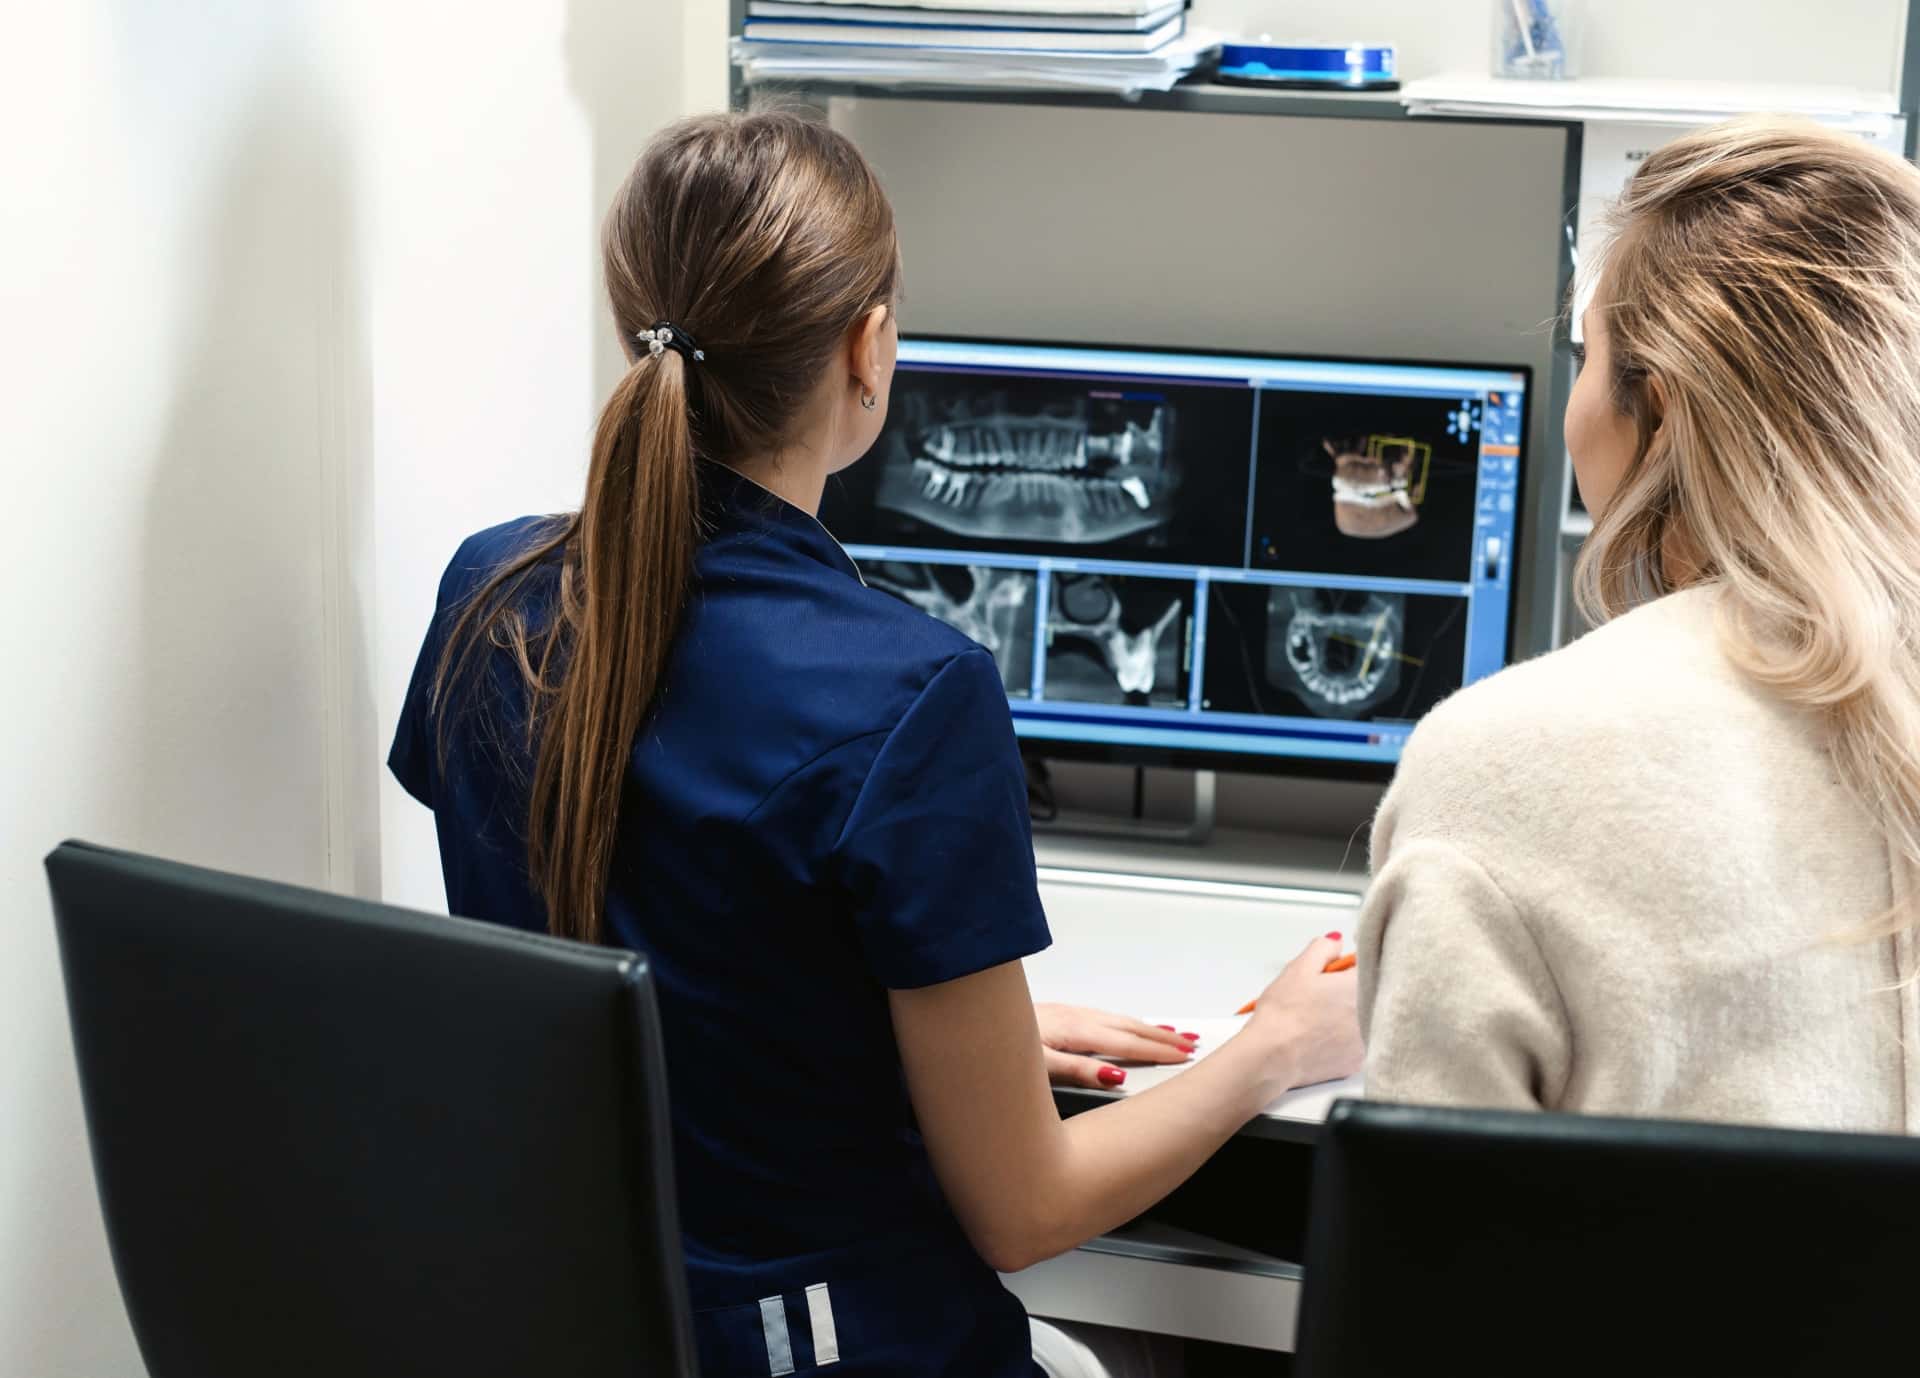 Dentaire | Centre de radiologie IRM et scanner | Imagerie médicale HPA | Antony